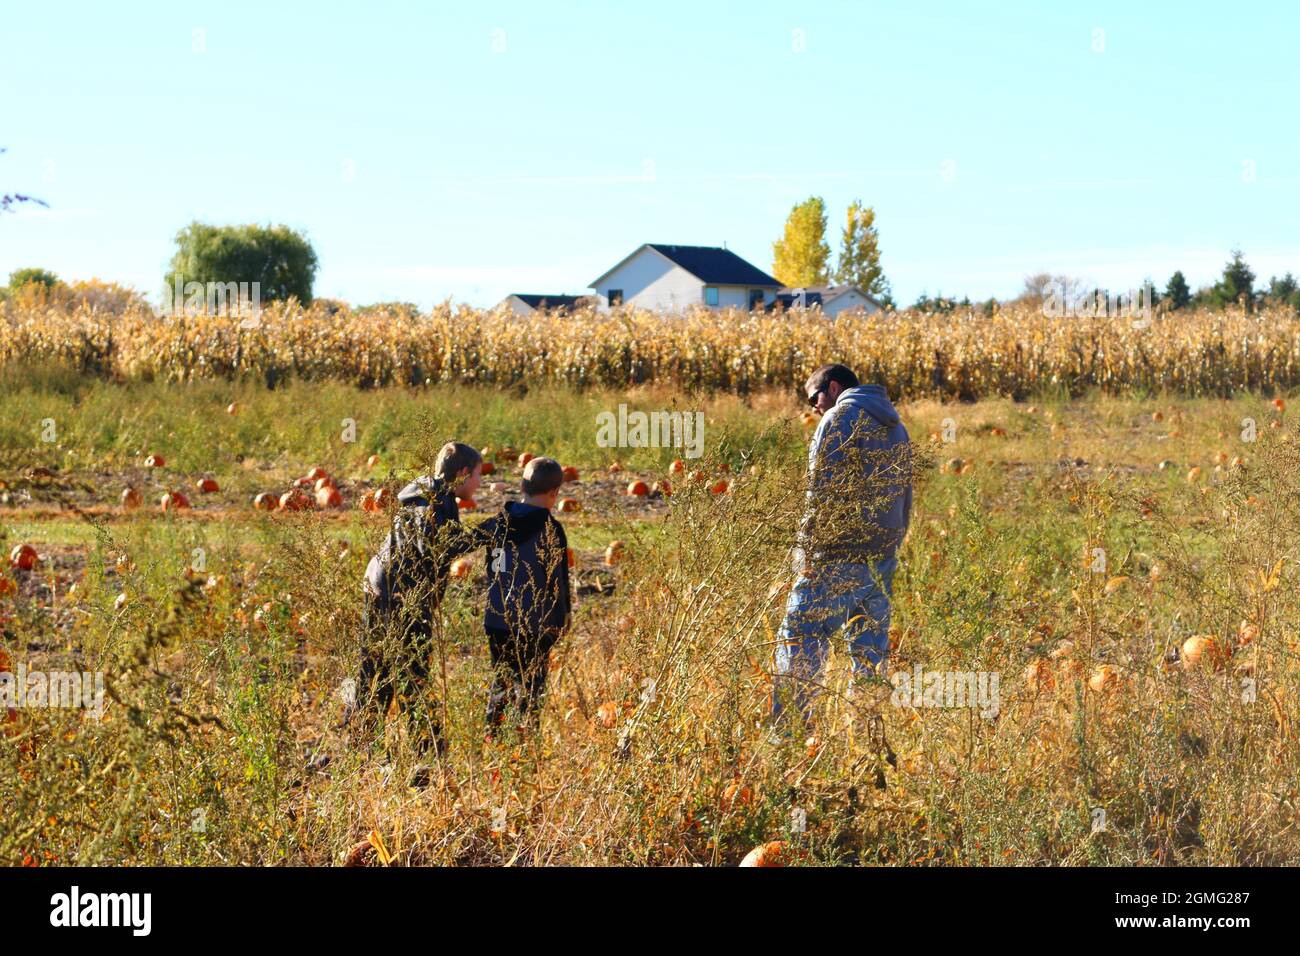 Minnesota pumpkin picking Stock Photo